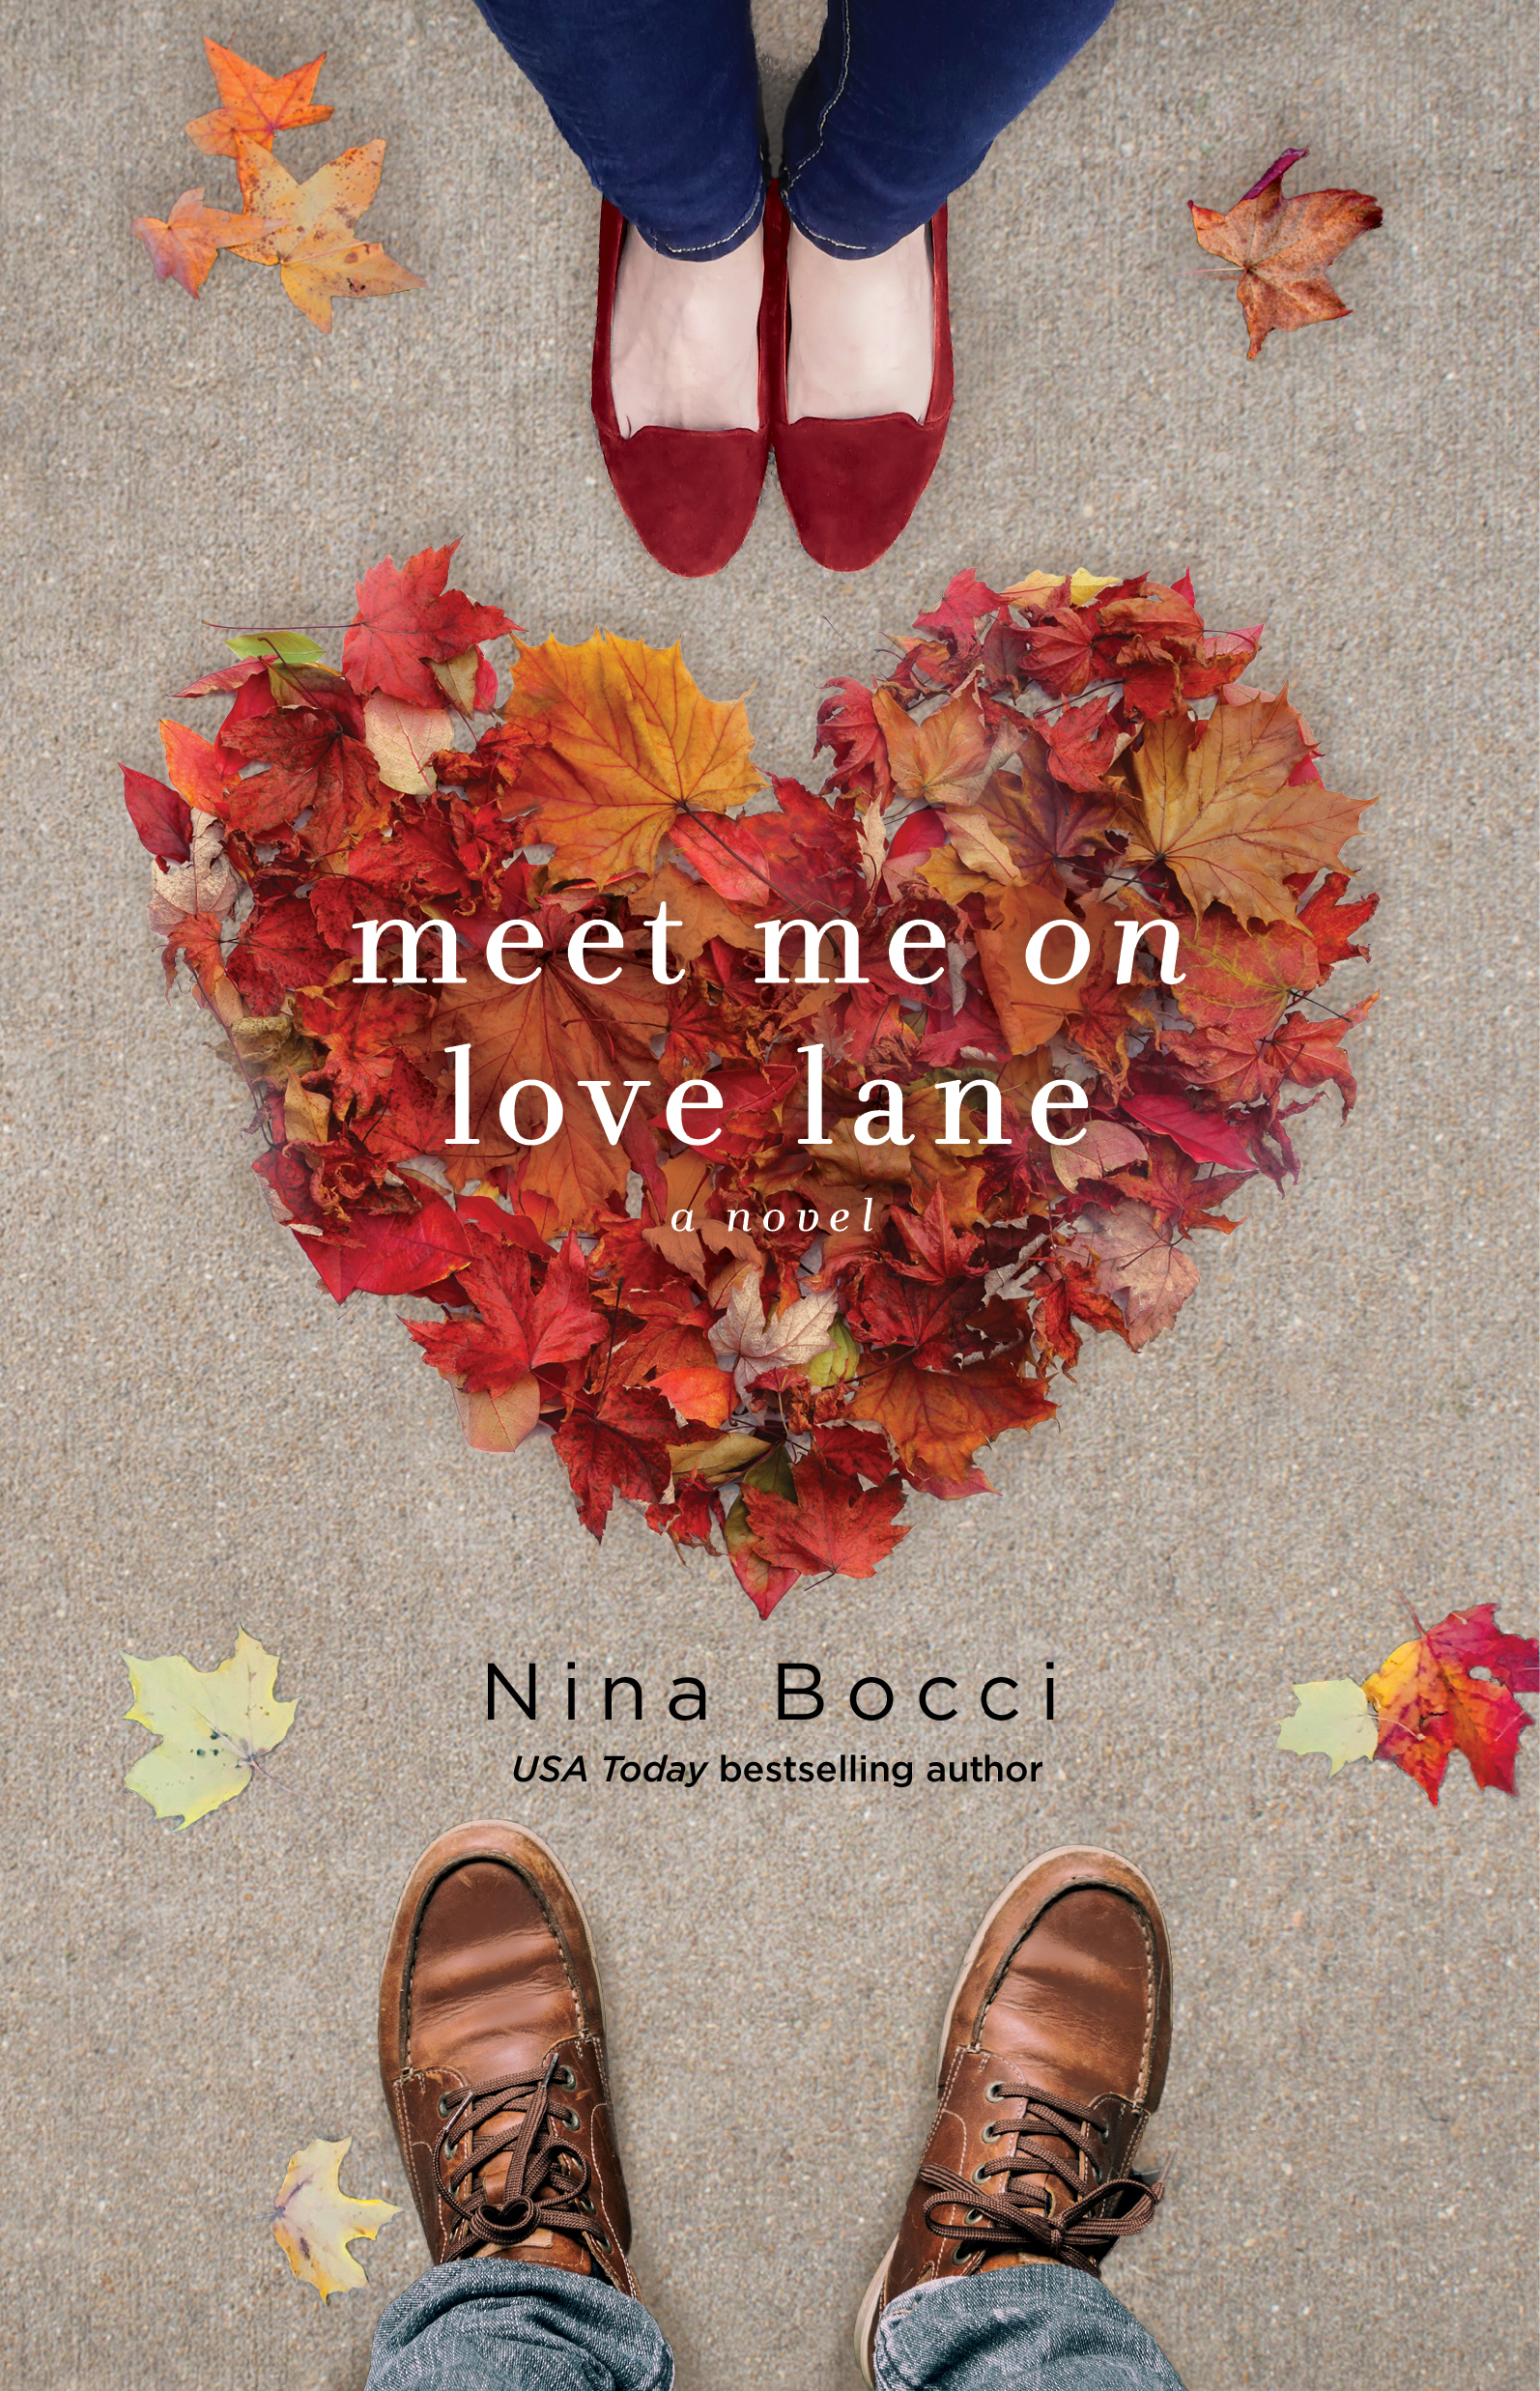 Meet Me on Love Lane by Nina Bocci